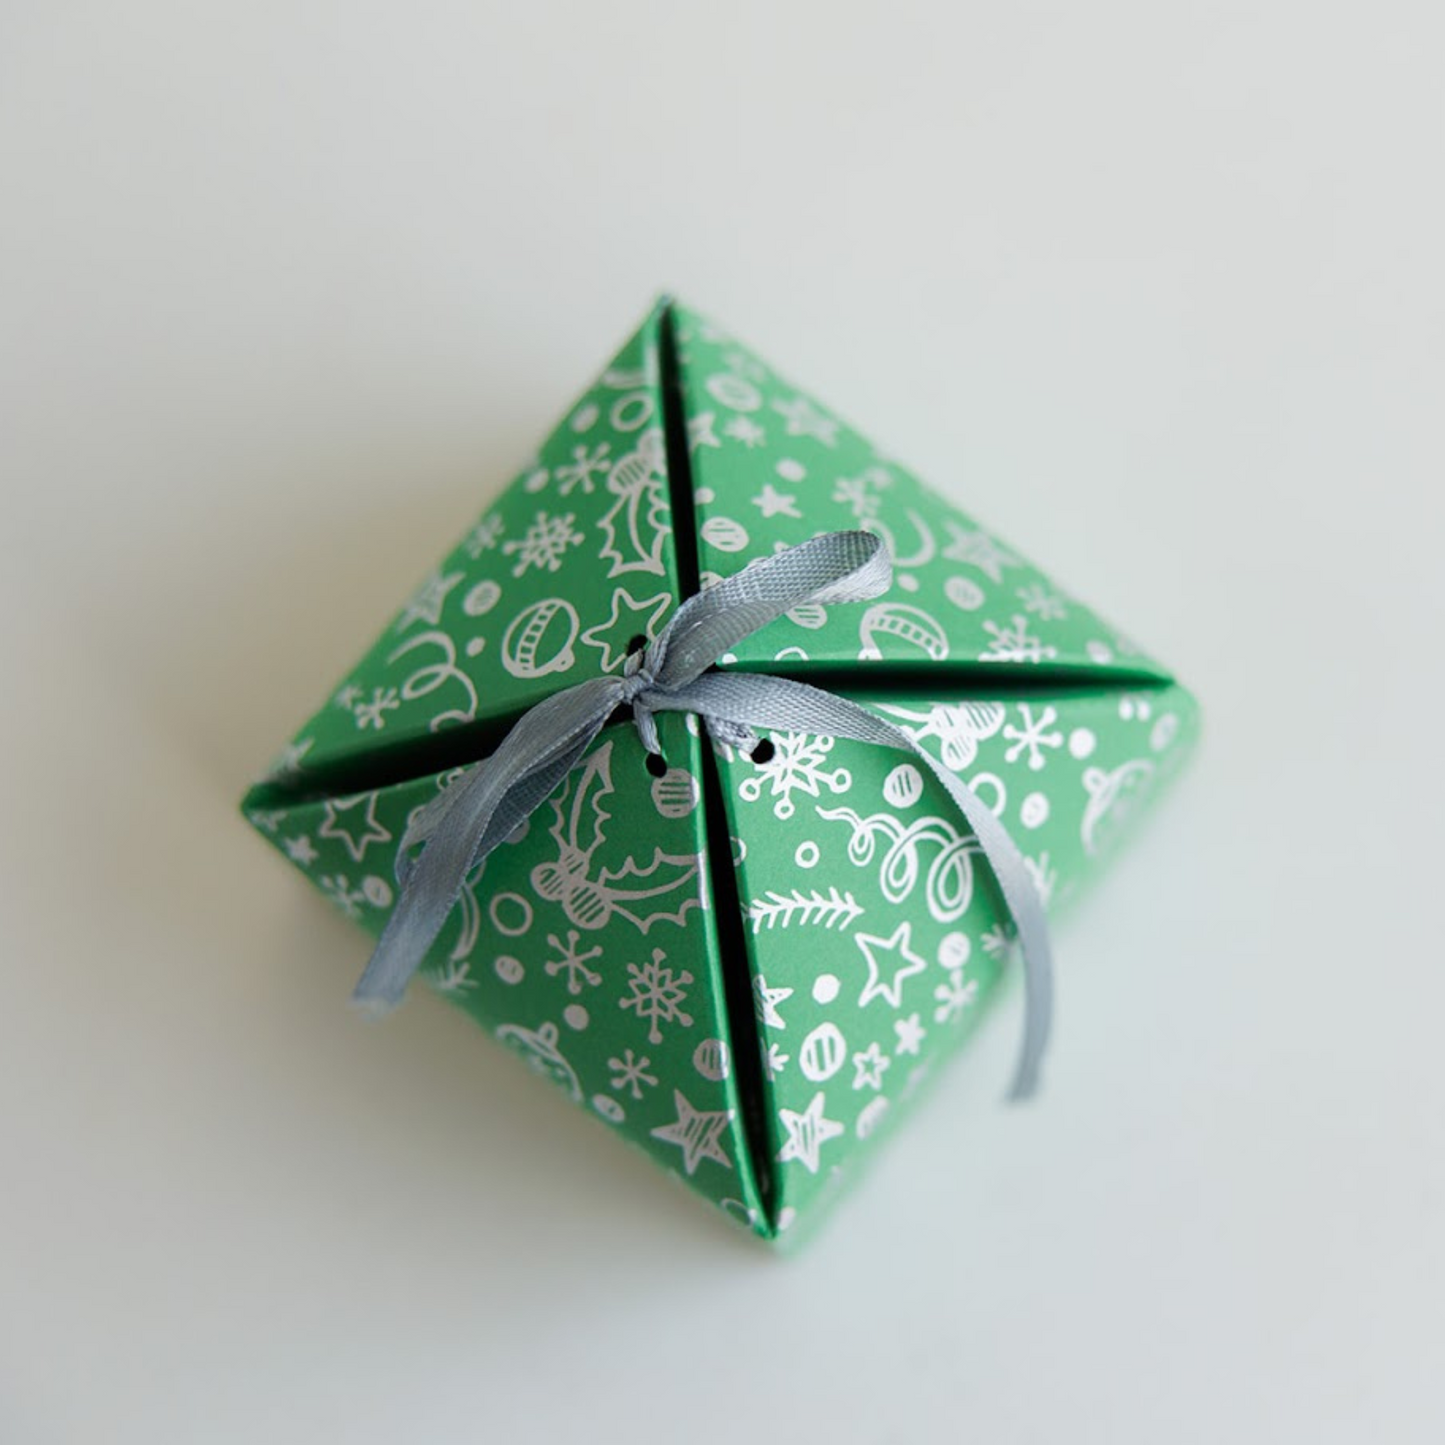 Christmas Green Pyramid Gift Box